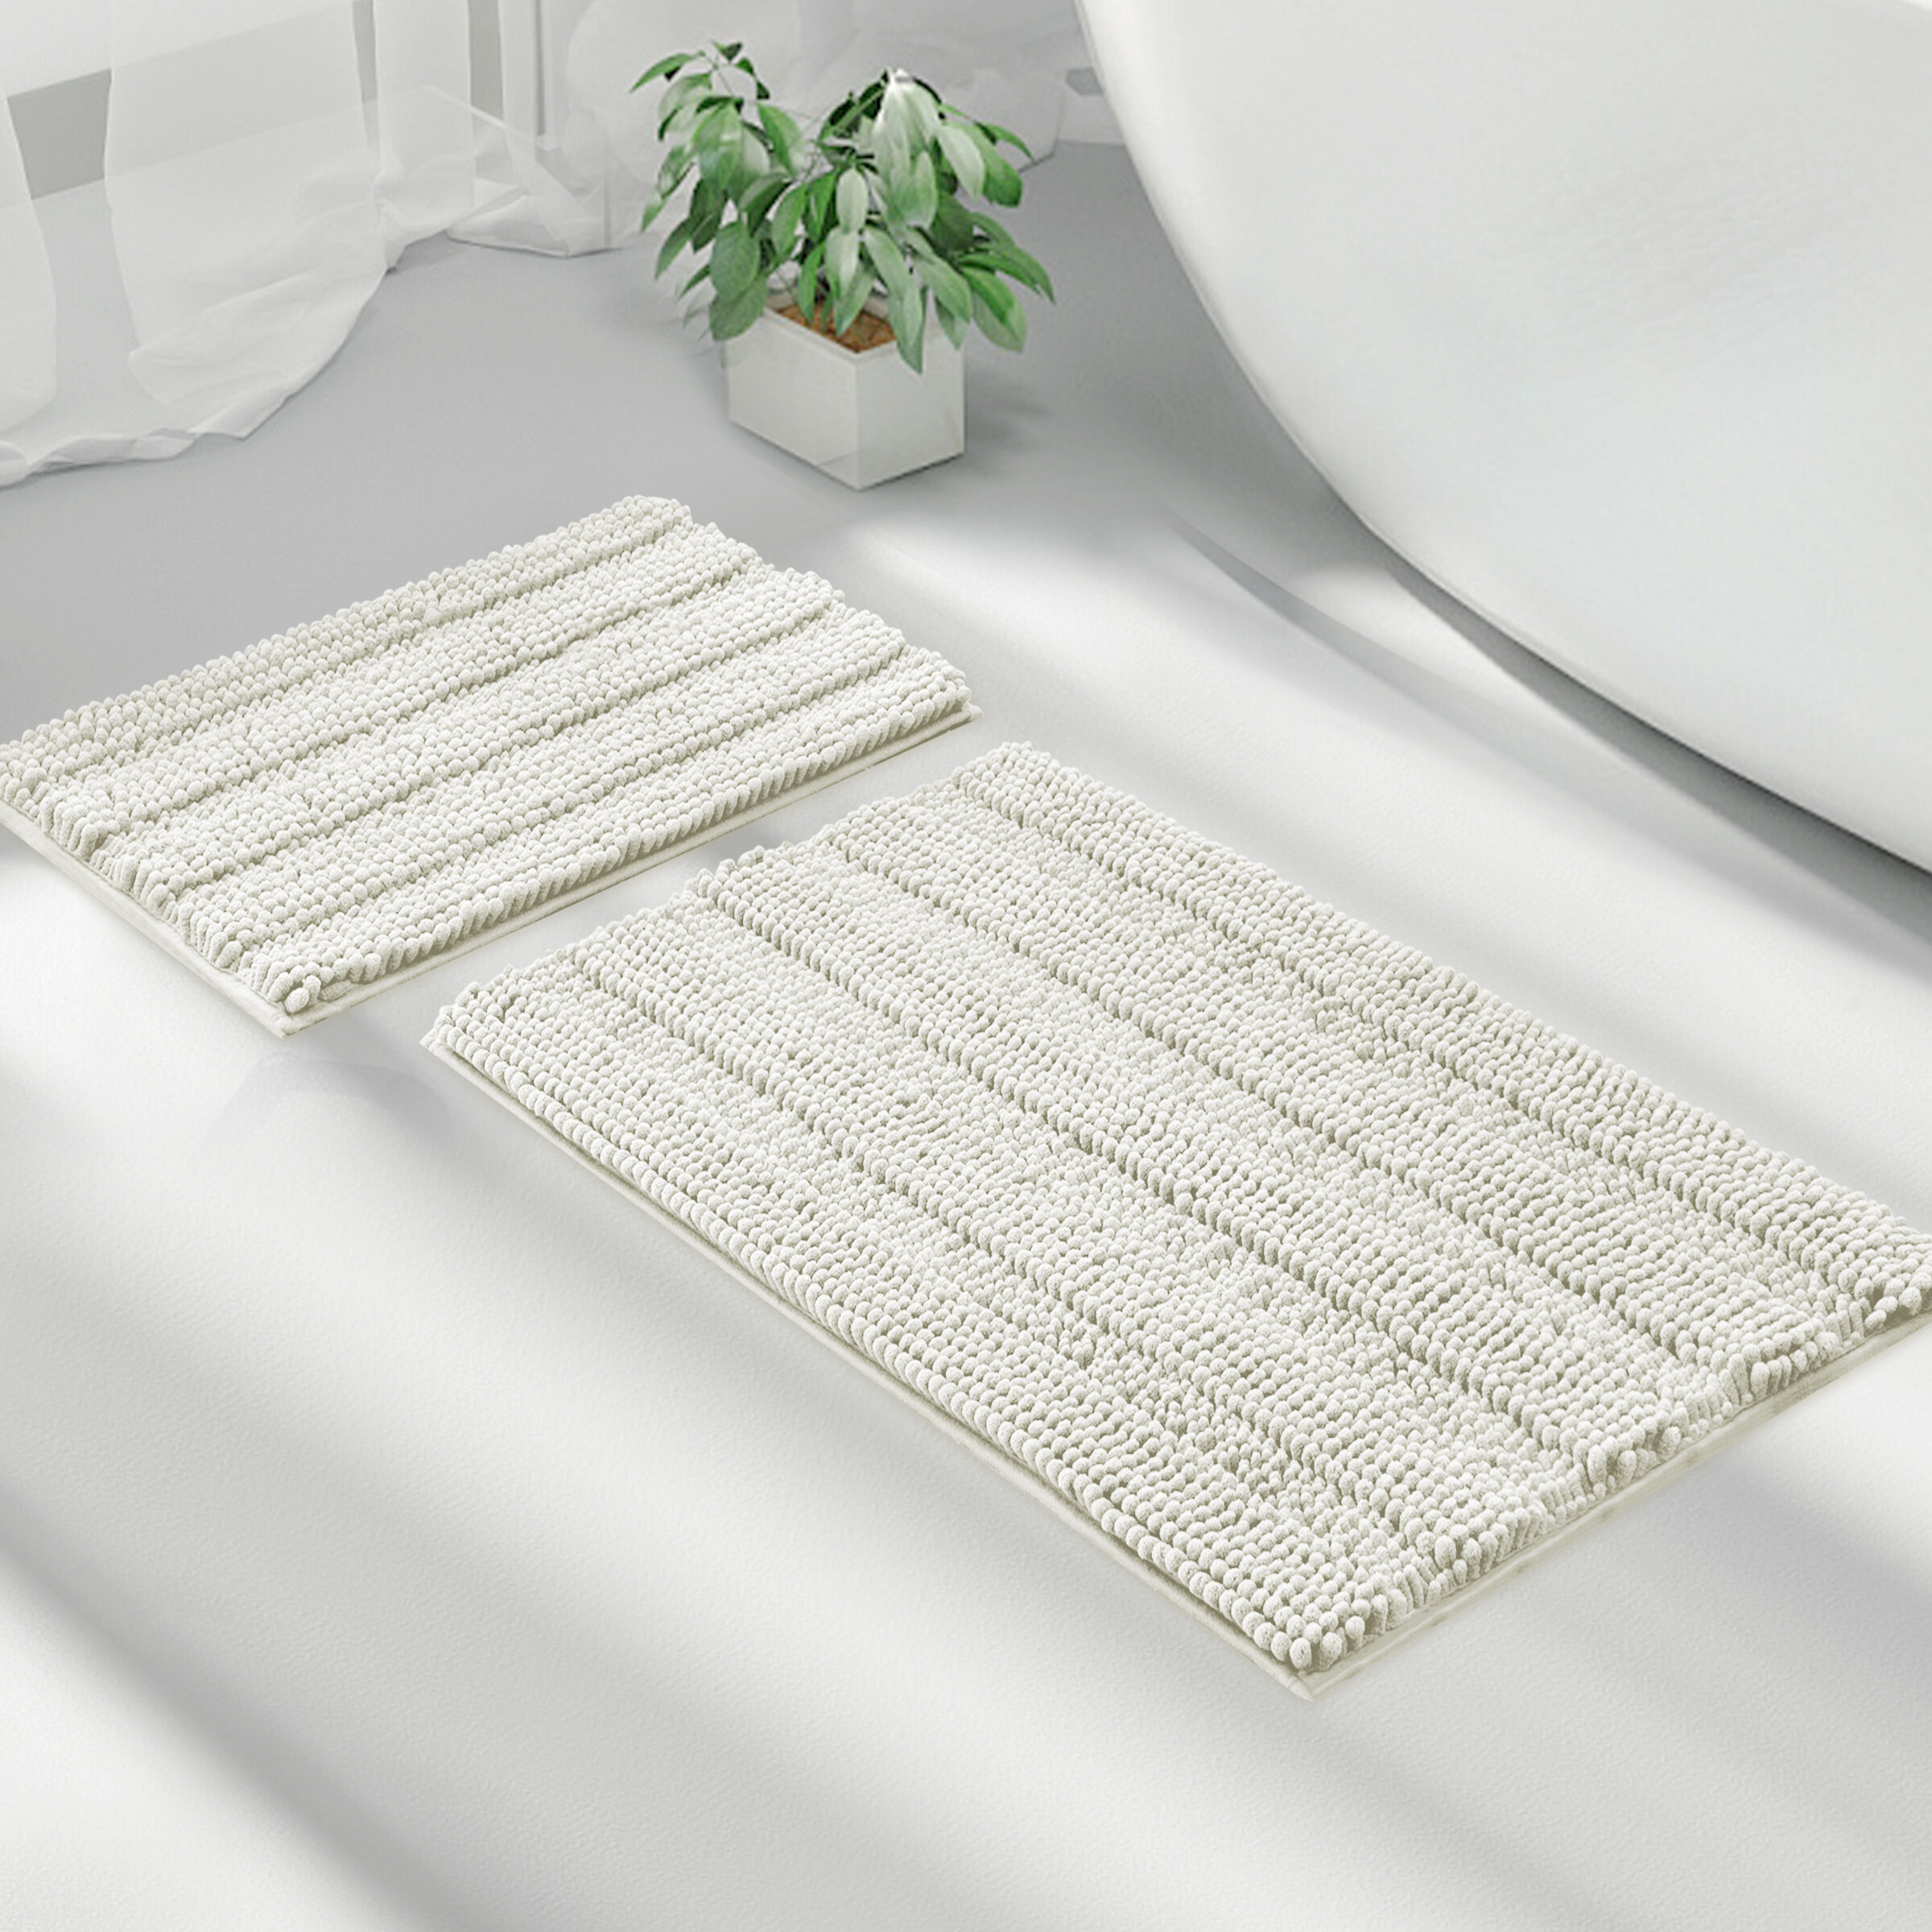 Non-slip Absorbent Soft Simple Bathroom Bath Rug Carpet Home Floor Mat LJ 